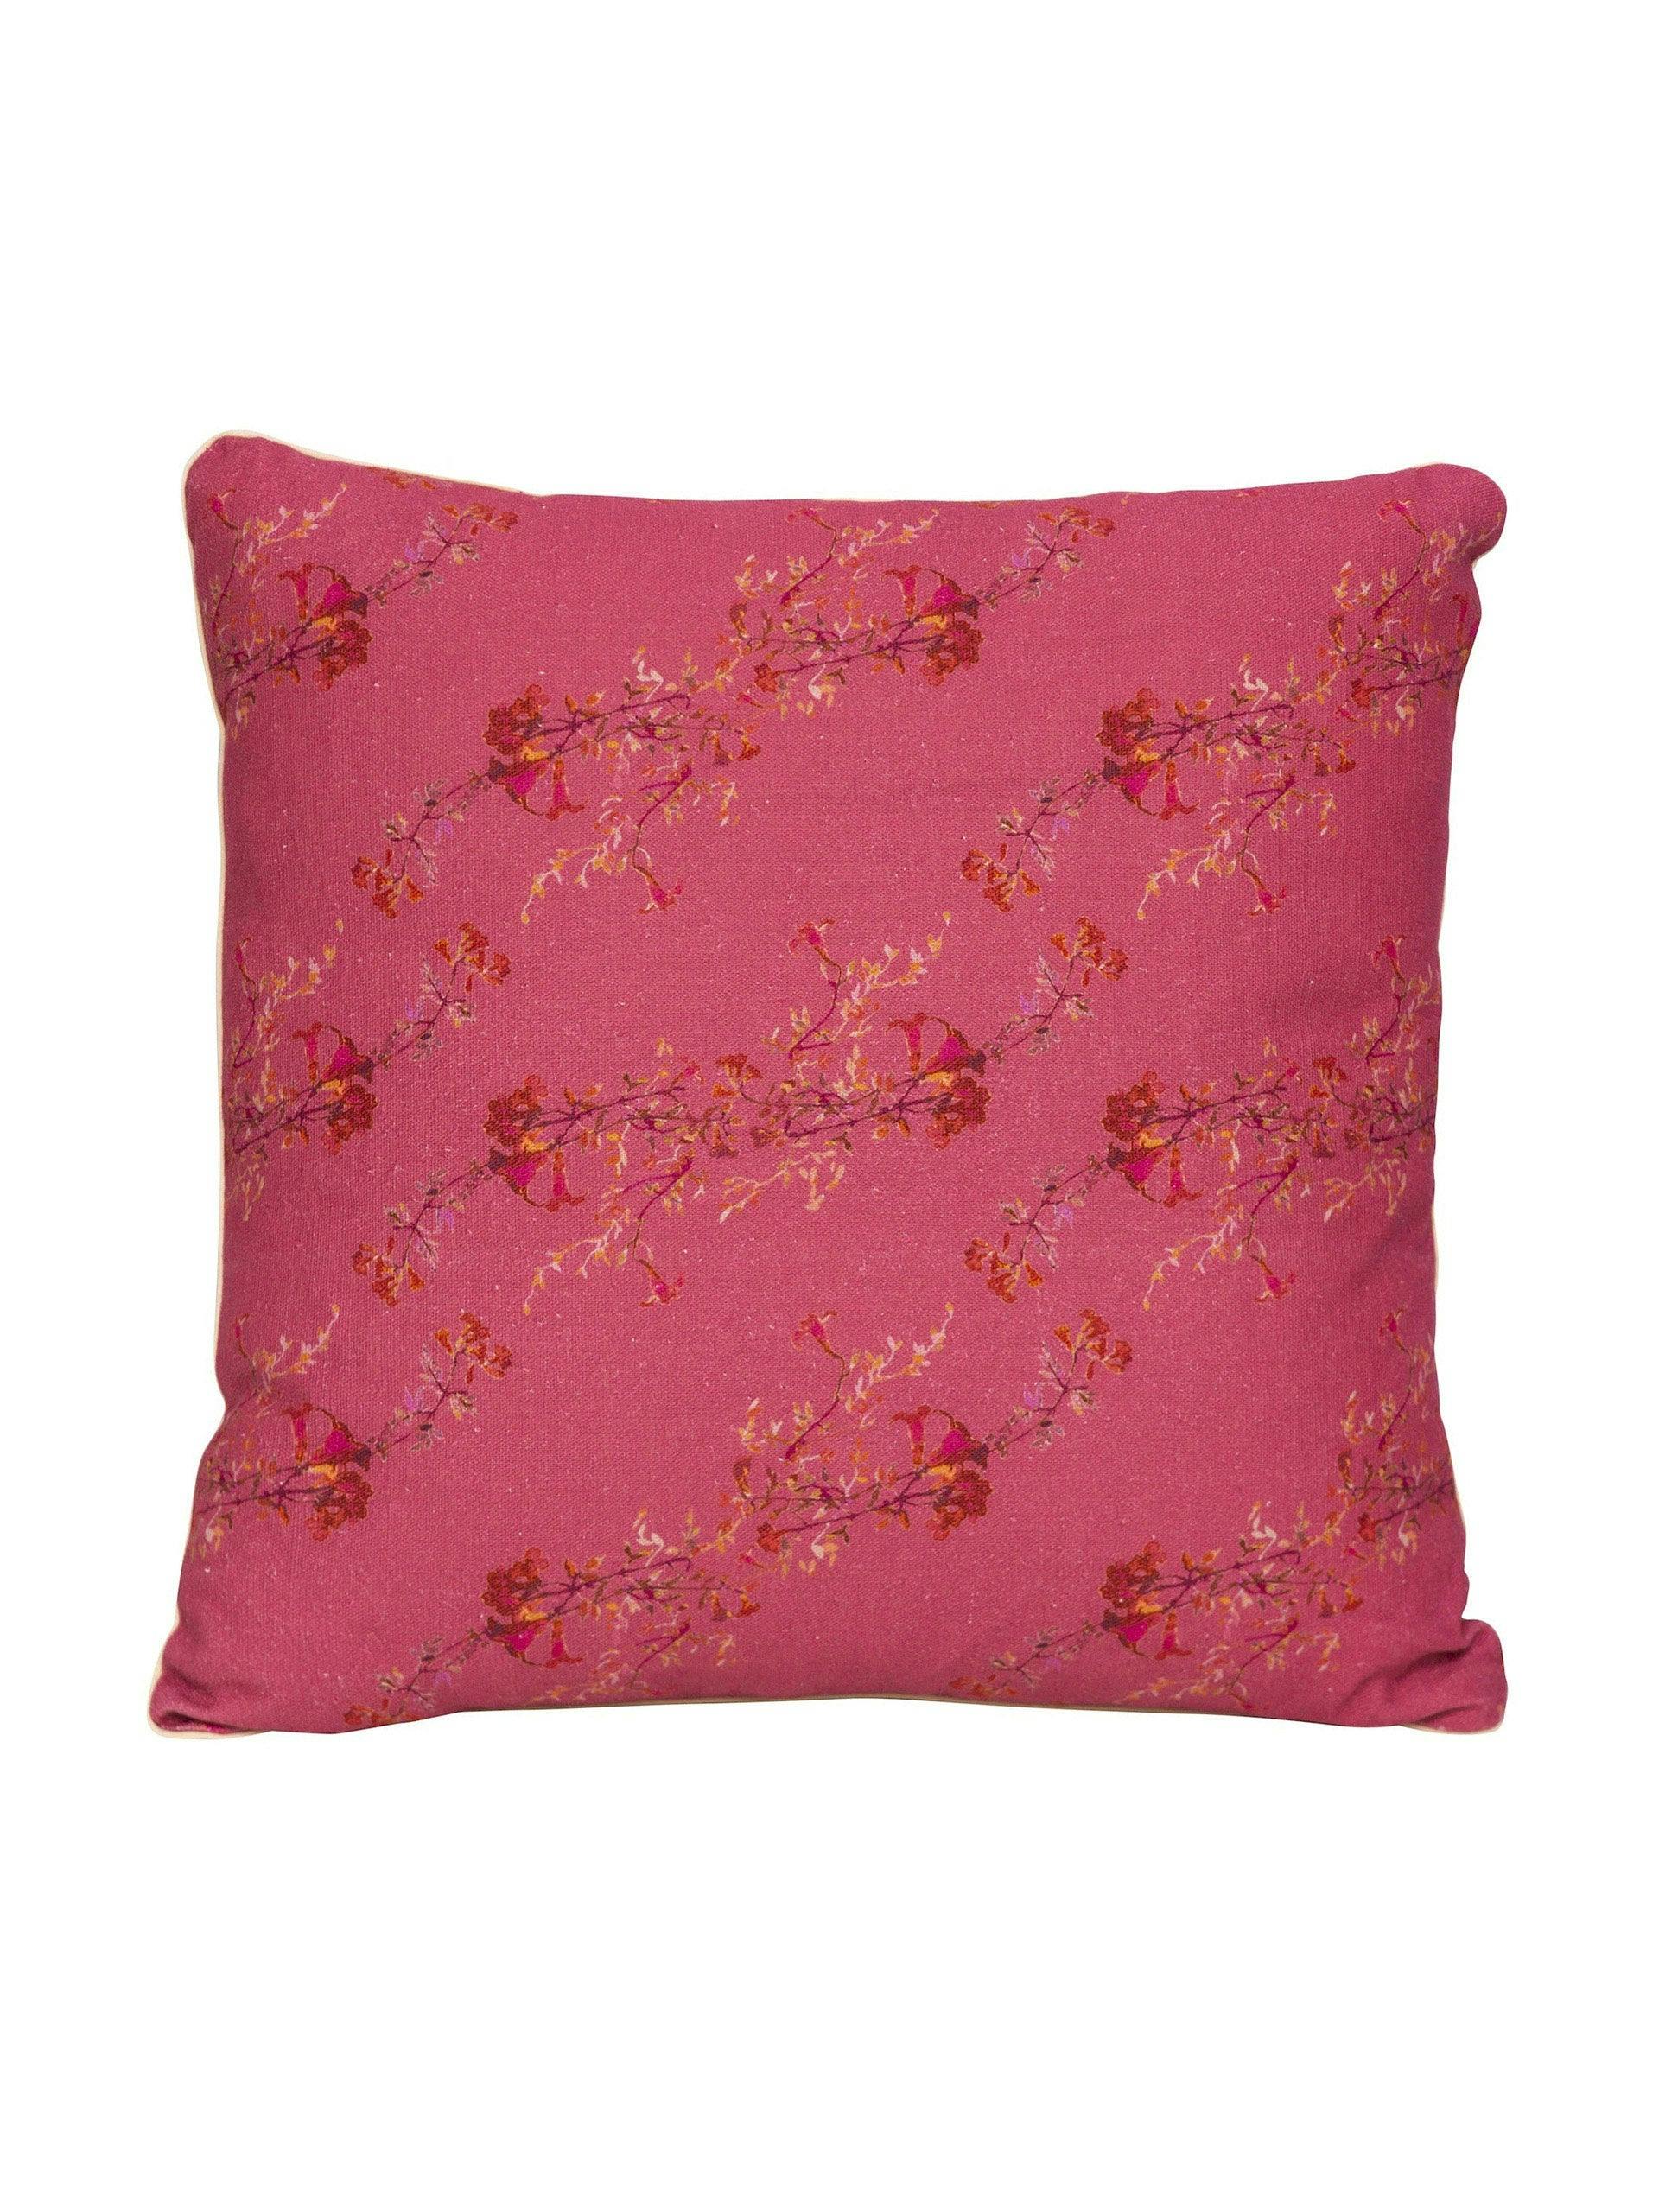 Pink square cushion